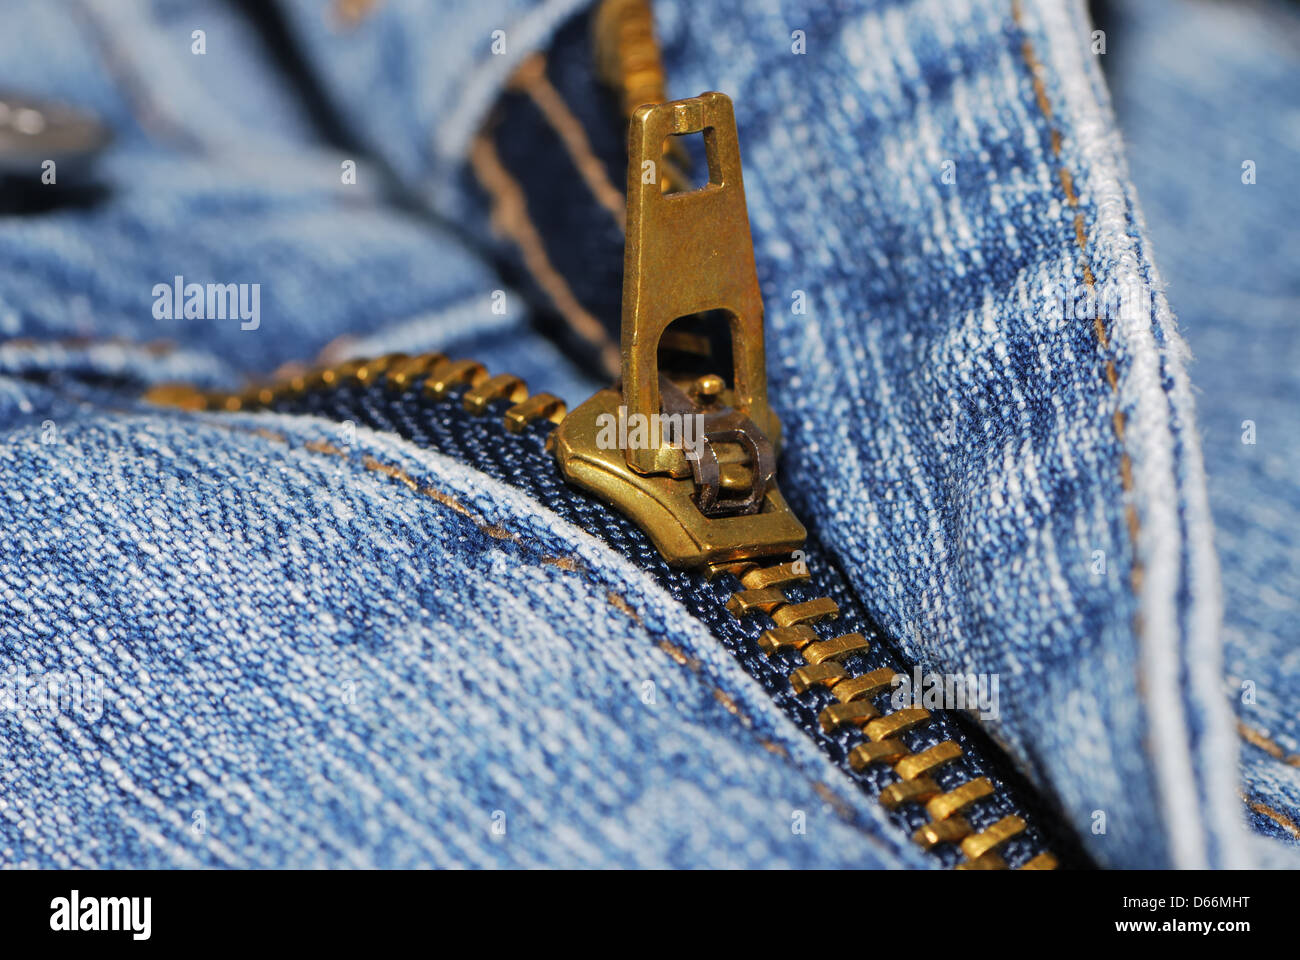 half open zipper of a blue jeans Stock Photo - Alamy